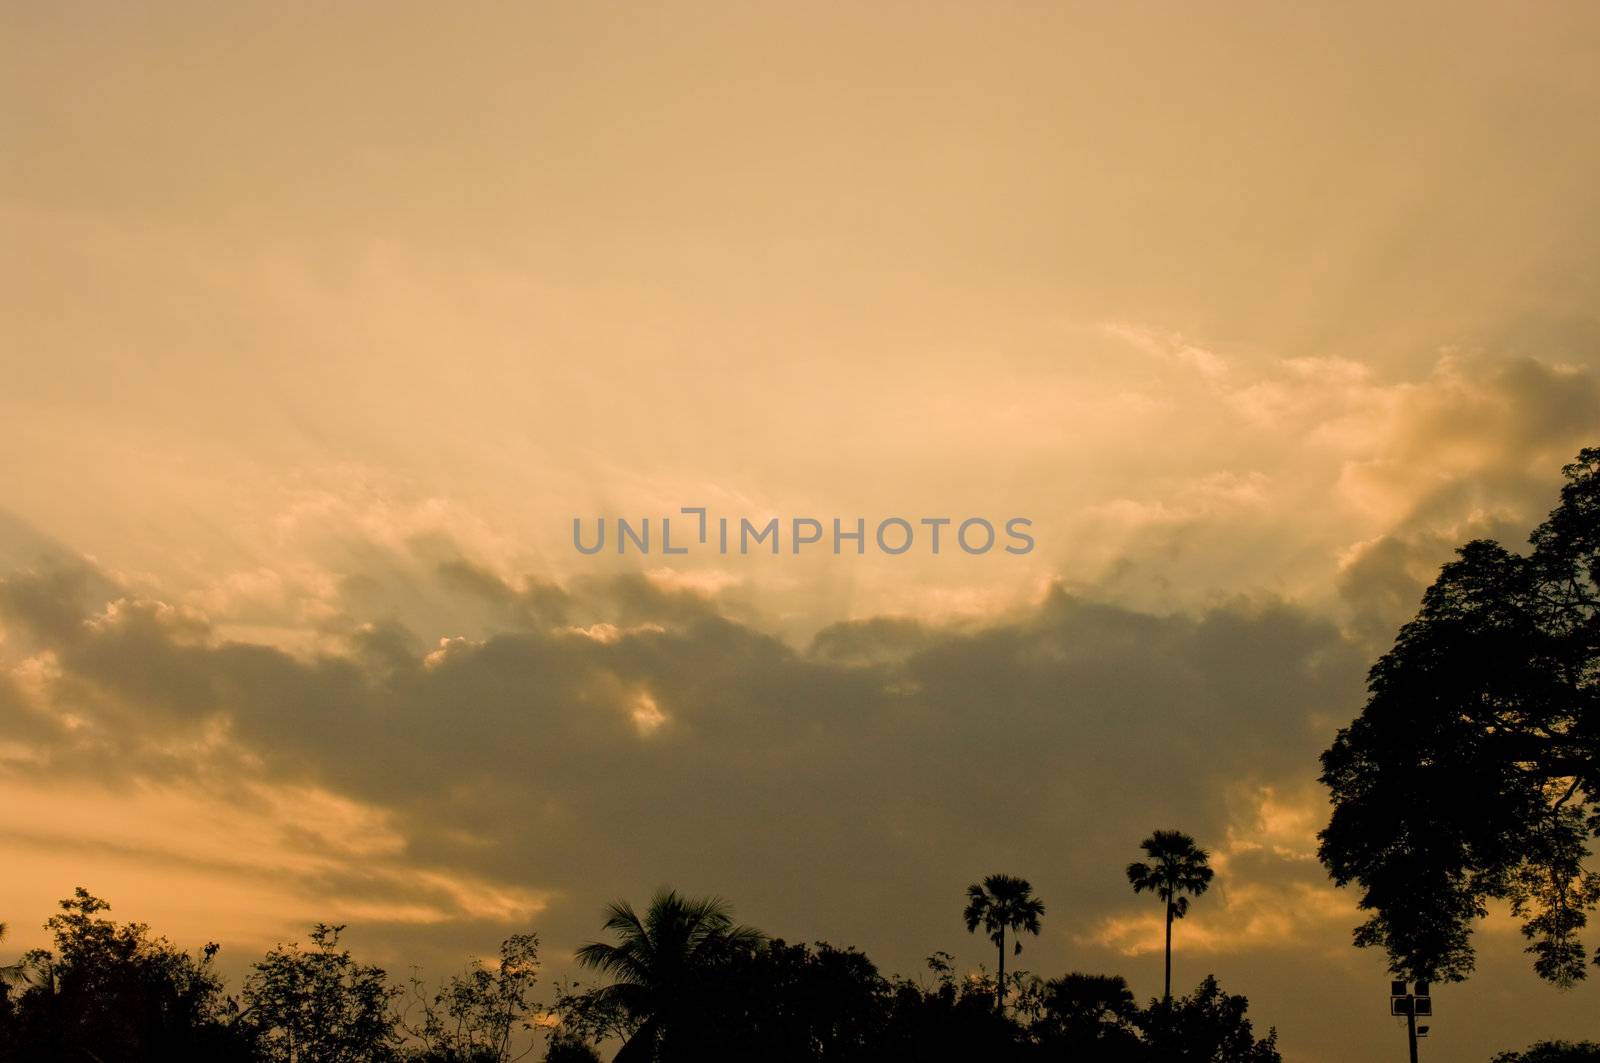 Sunrise sky with tree silhouette